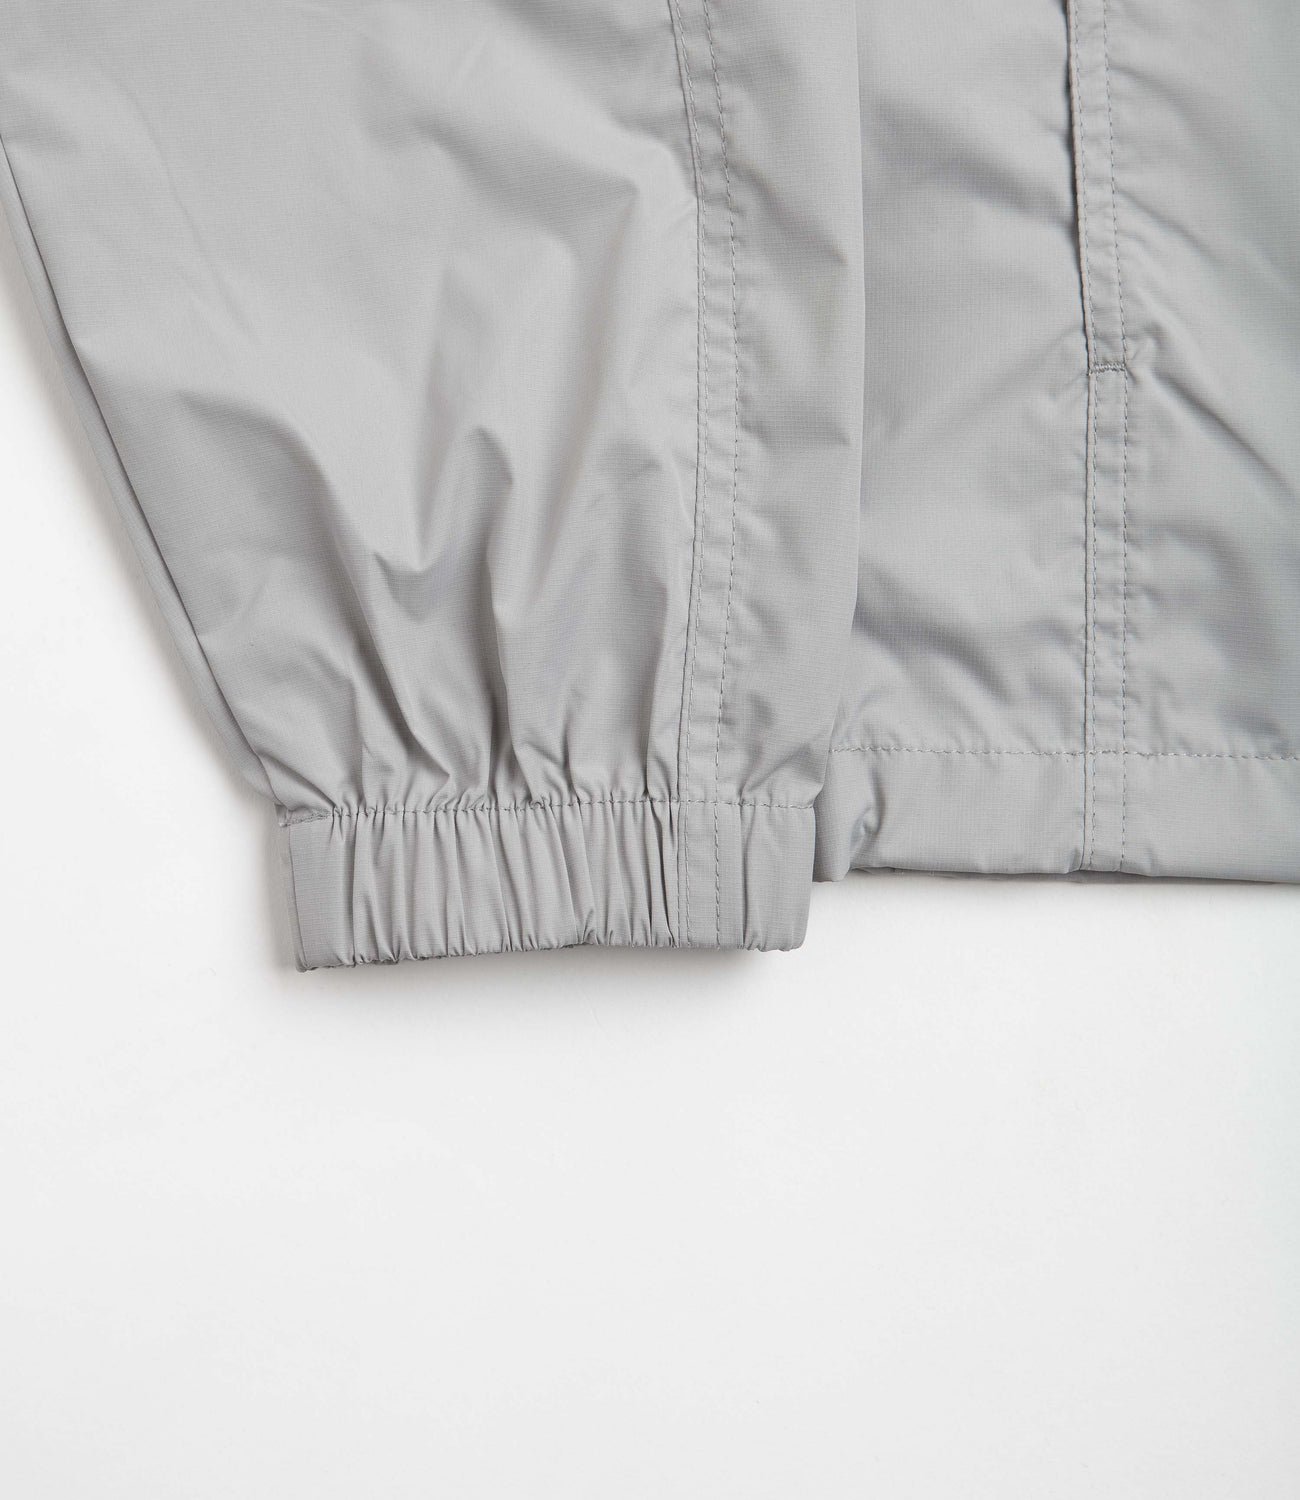 Polar Packable Anorak Jacket - Silver | Flatspot